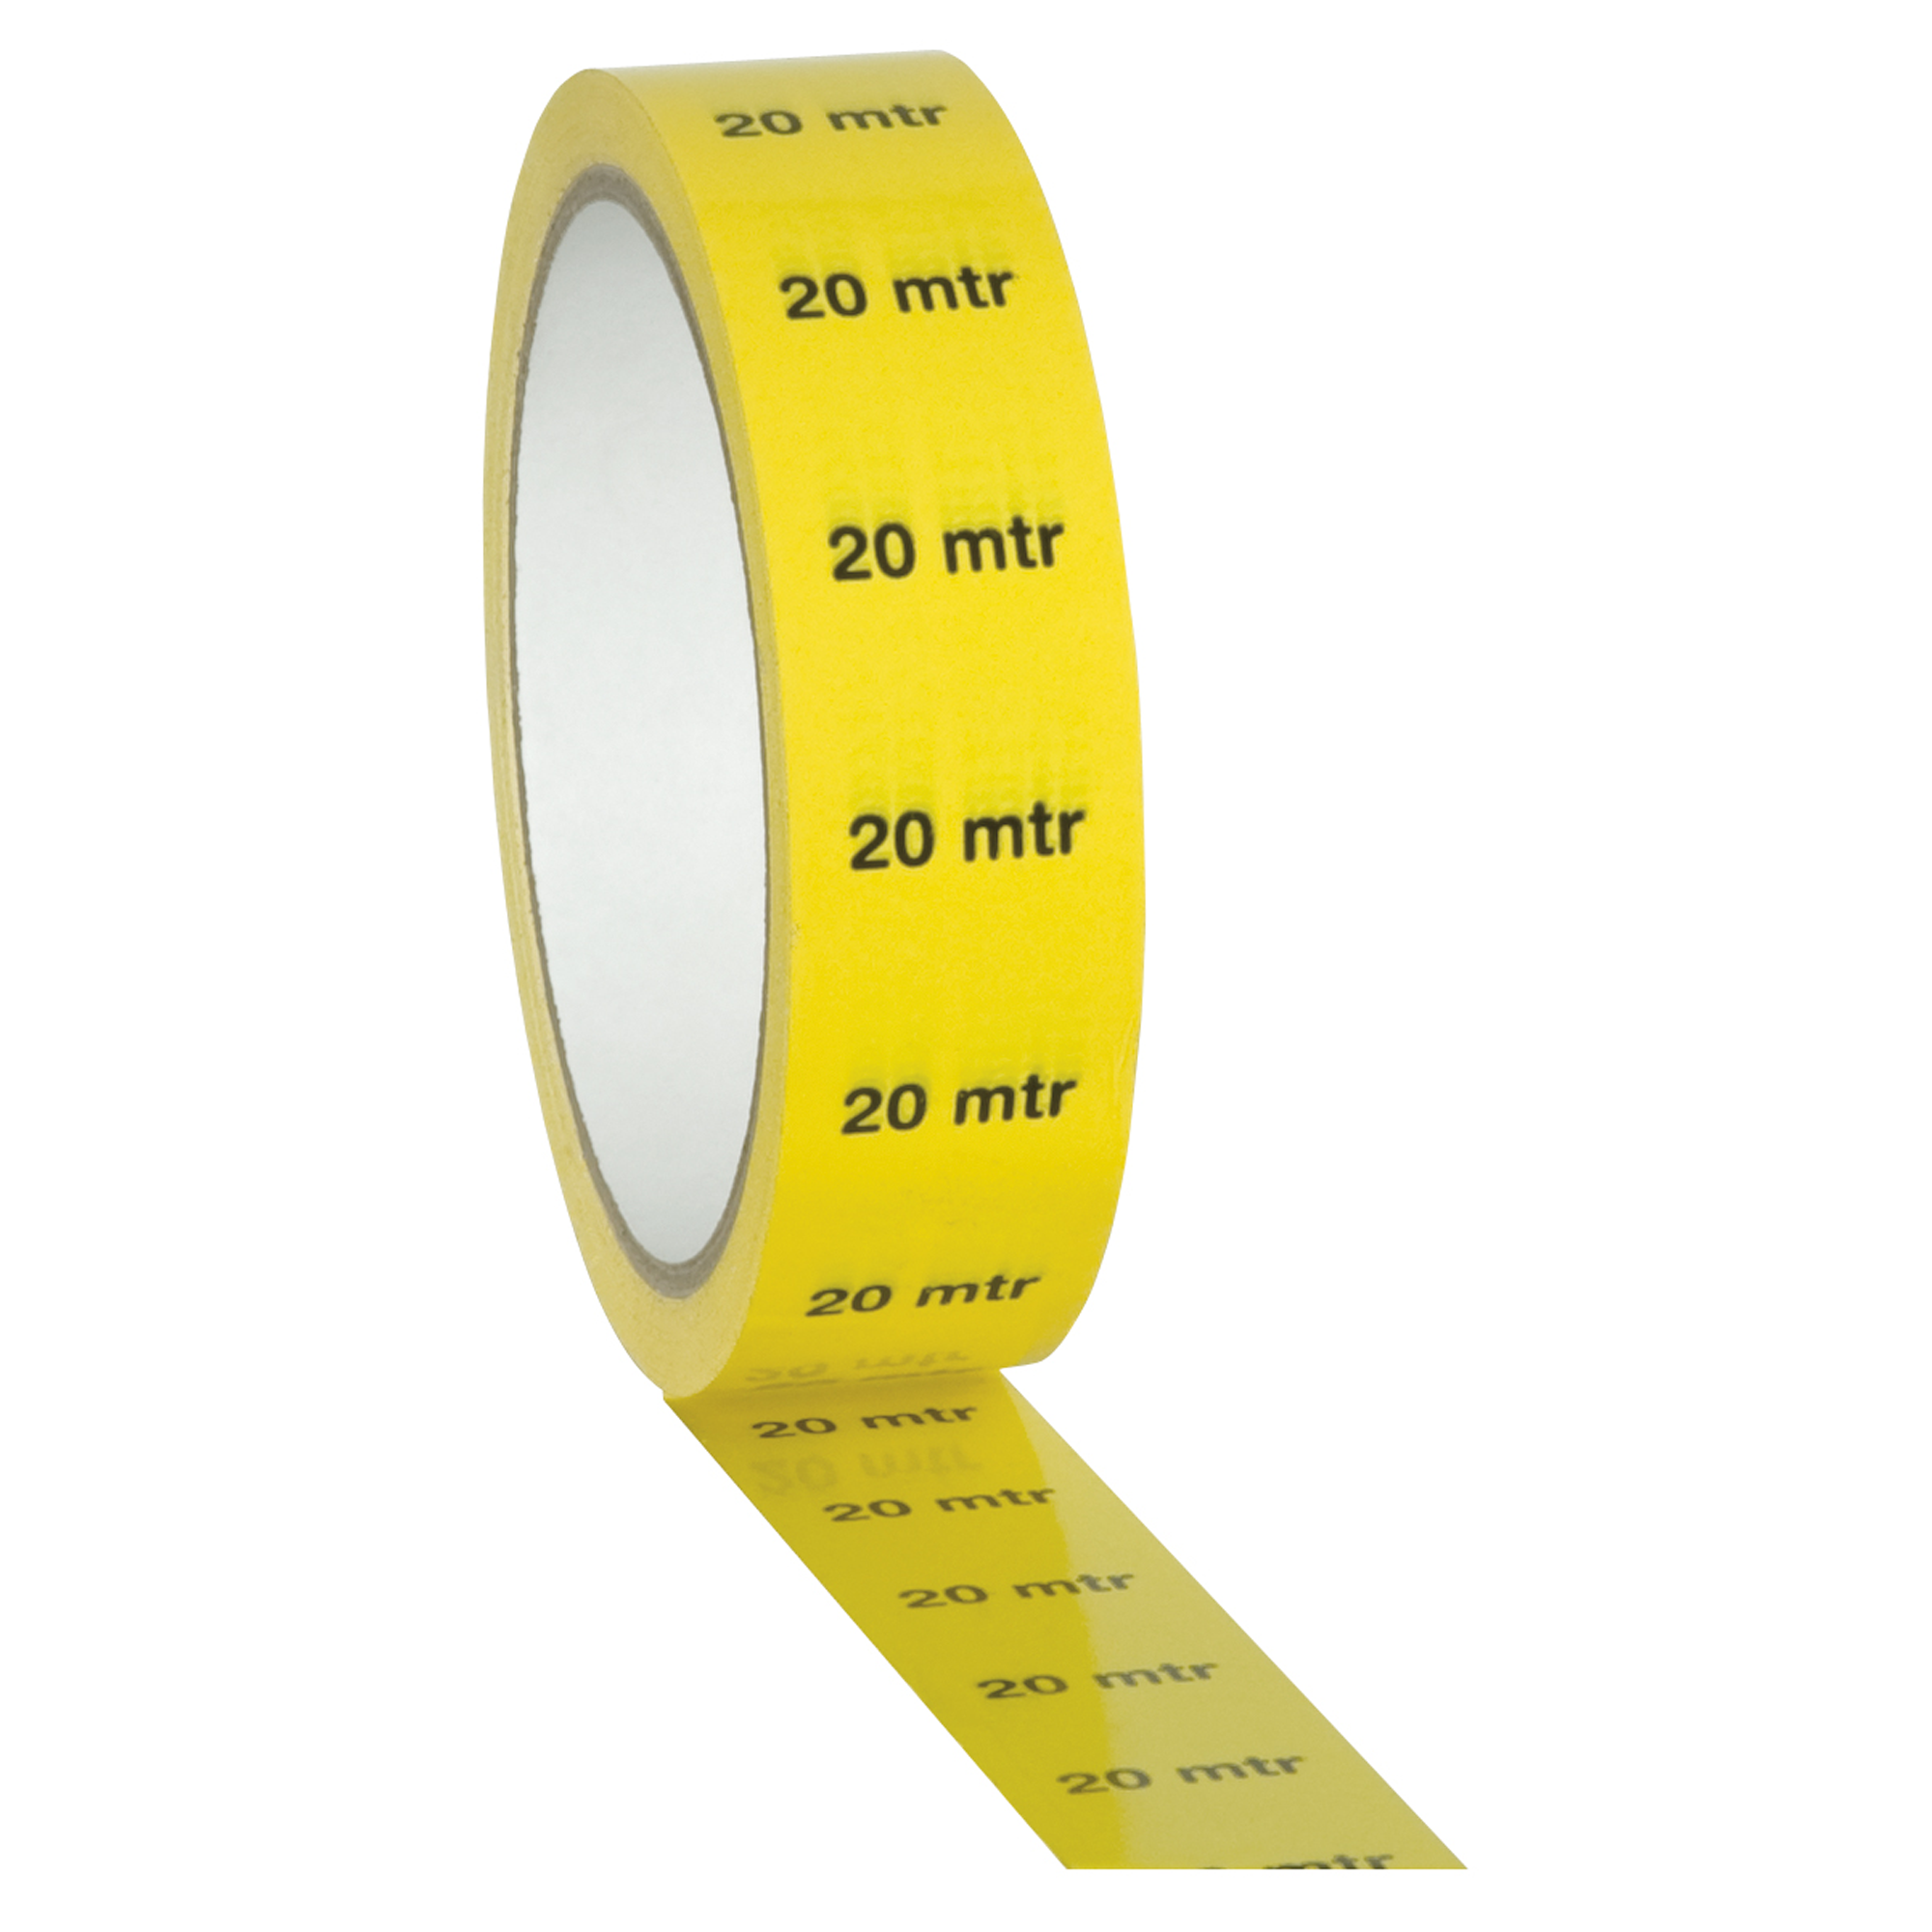 Showgear Marker / Indicator Tape "20 m" Markierung - gelb